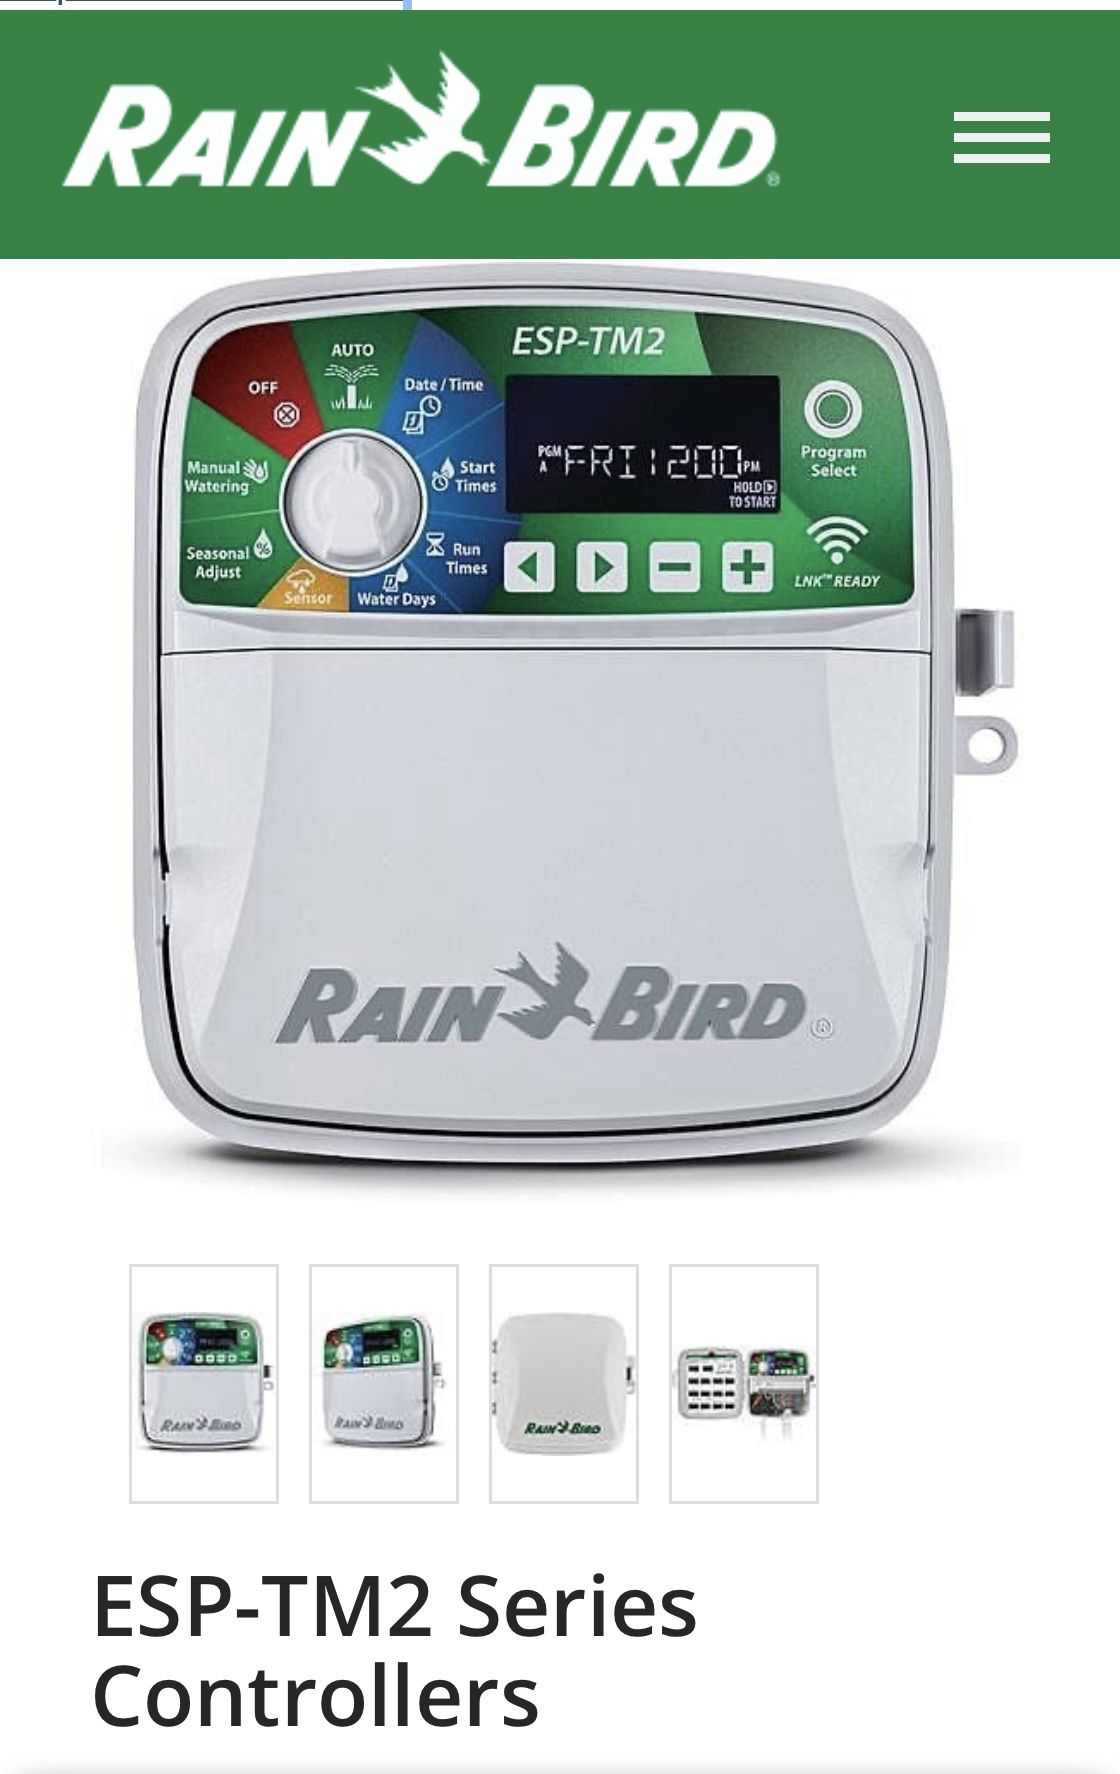 Rain Bird ESP-TM2 sprinkler system control unit